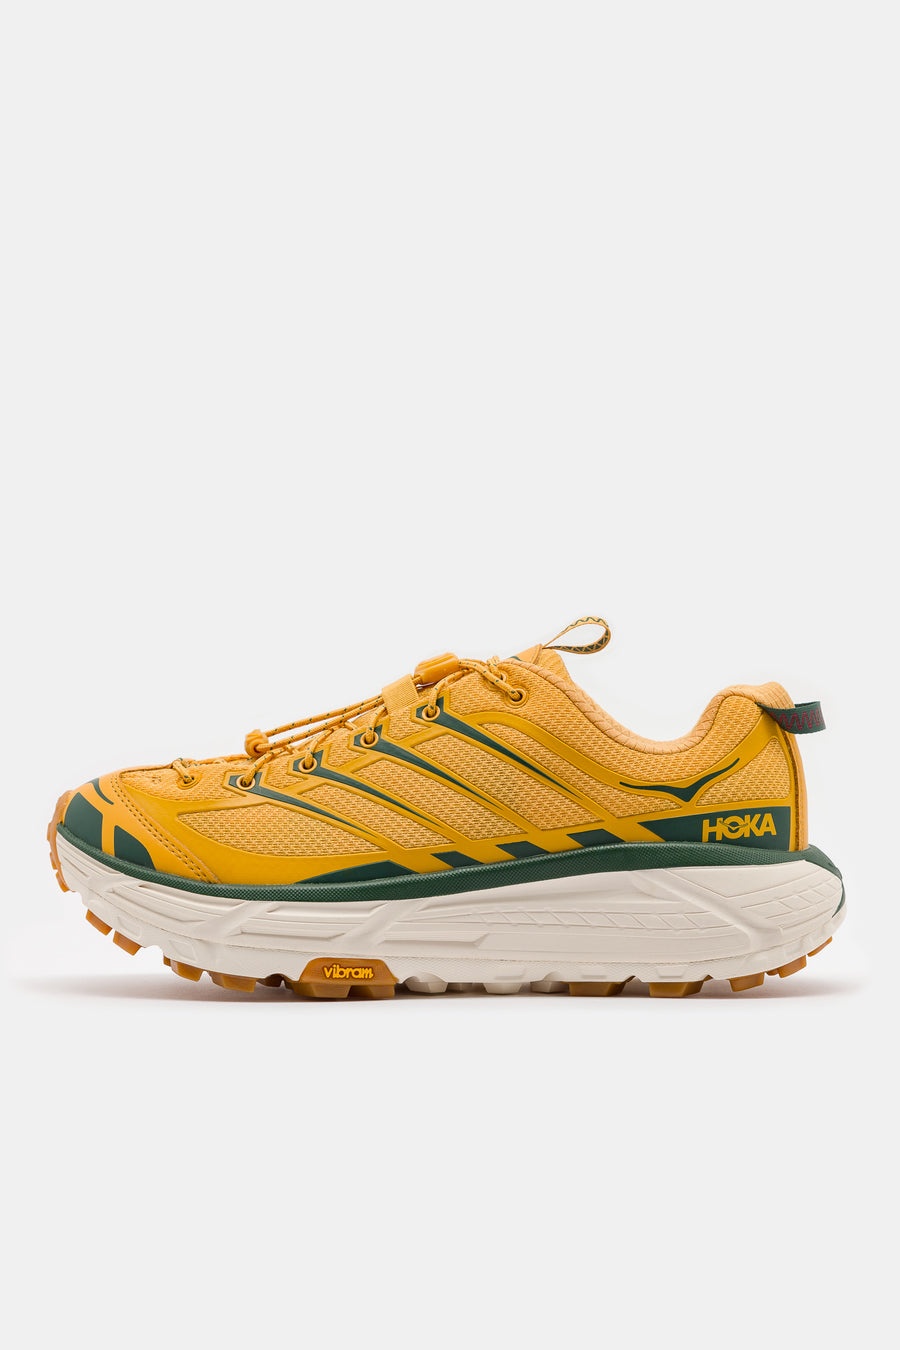 Mafate Three2 Sneaker in Golden Yellow/Eggnog - 1